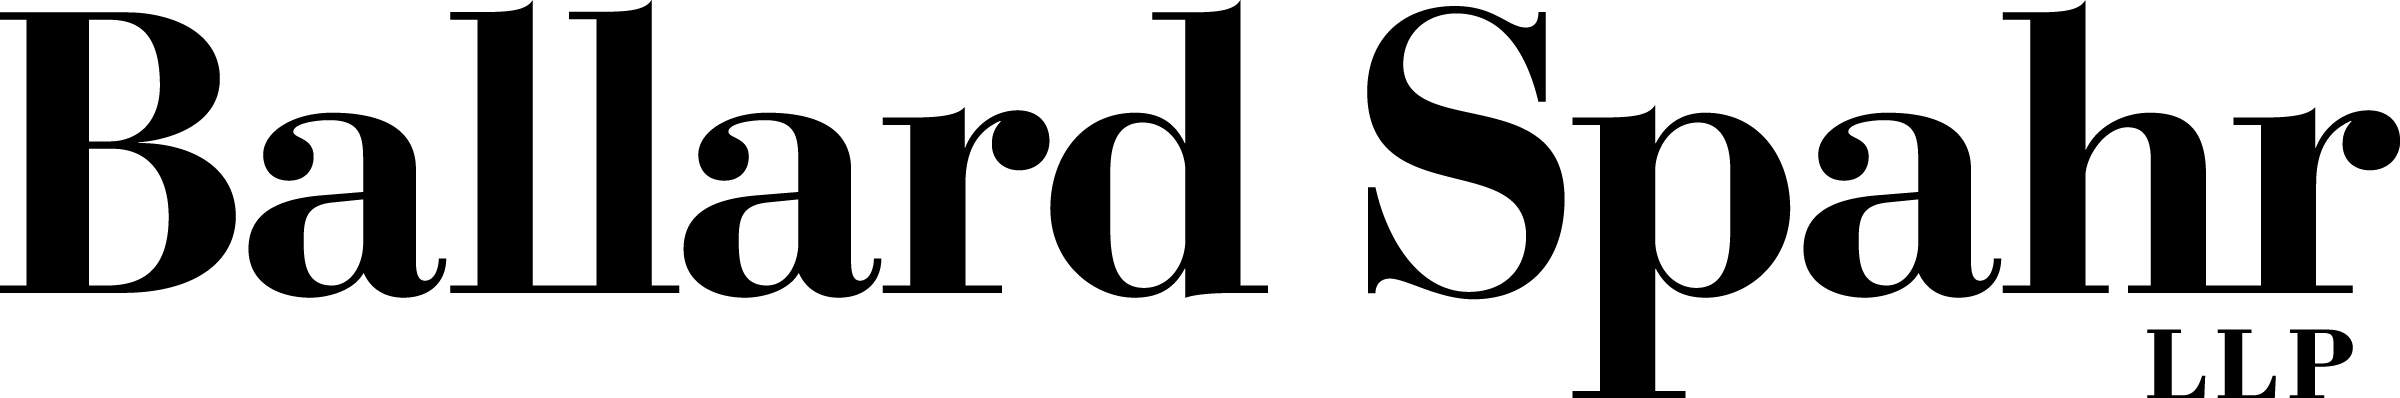 ballard spahr logo